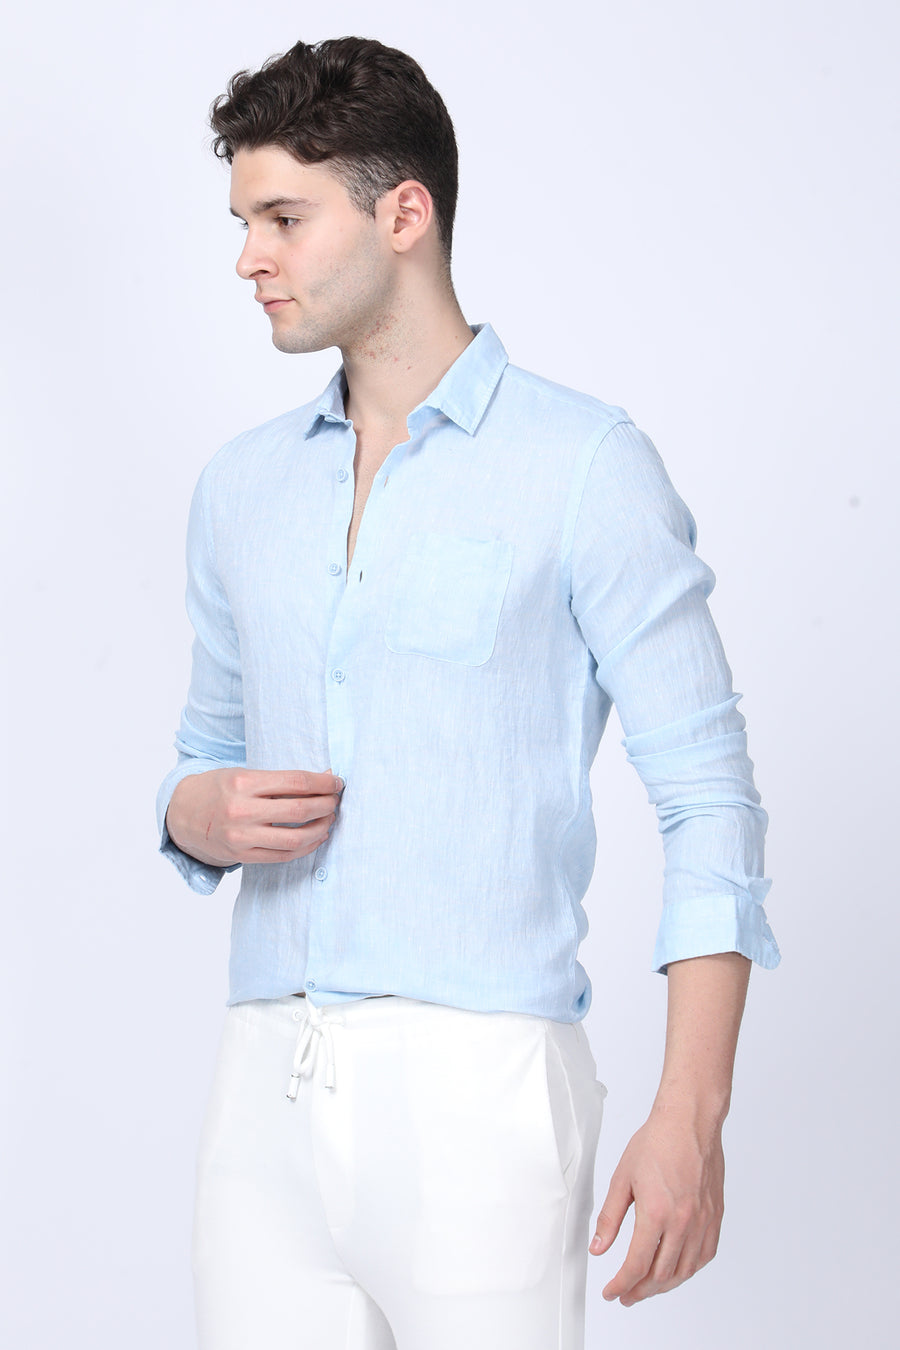 Oyalo - 100% Linen Shirt - Lt Blue